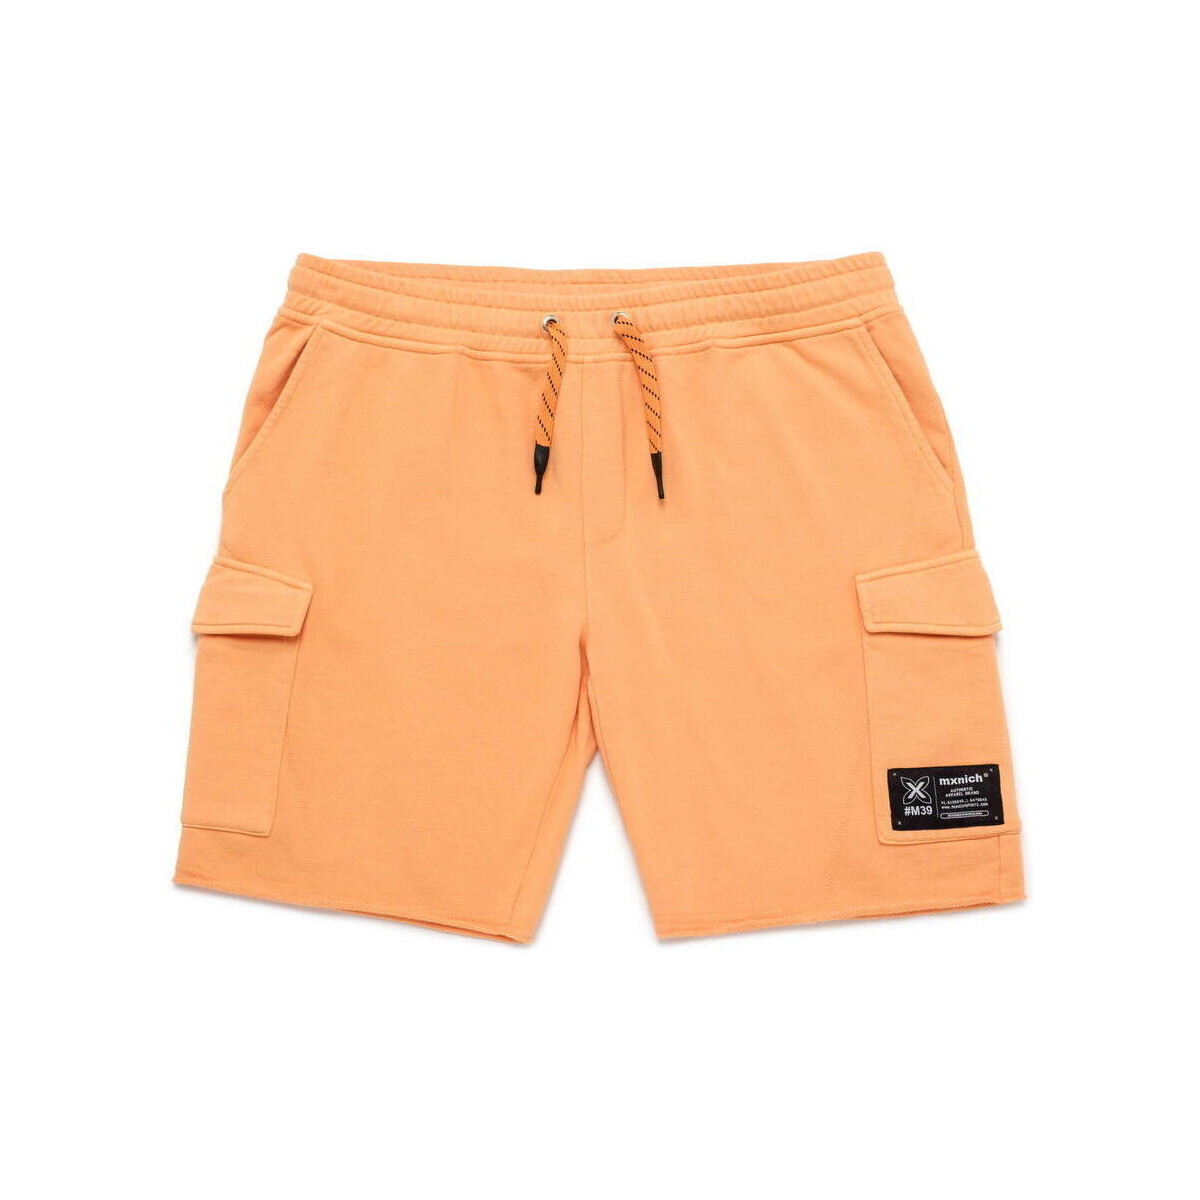 textil Herr Shorts / Bermudas Munich Bermuda camp Orange